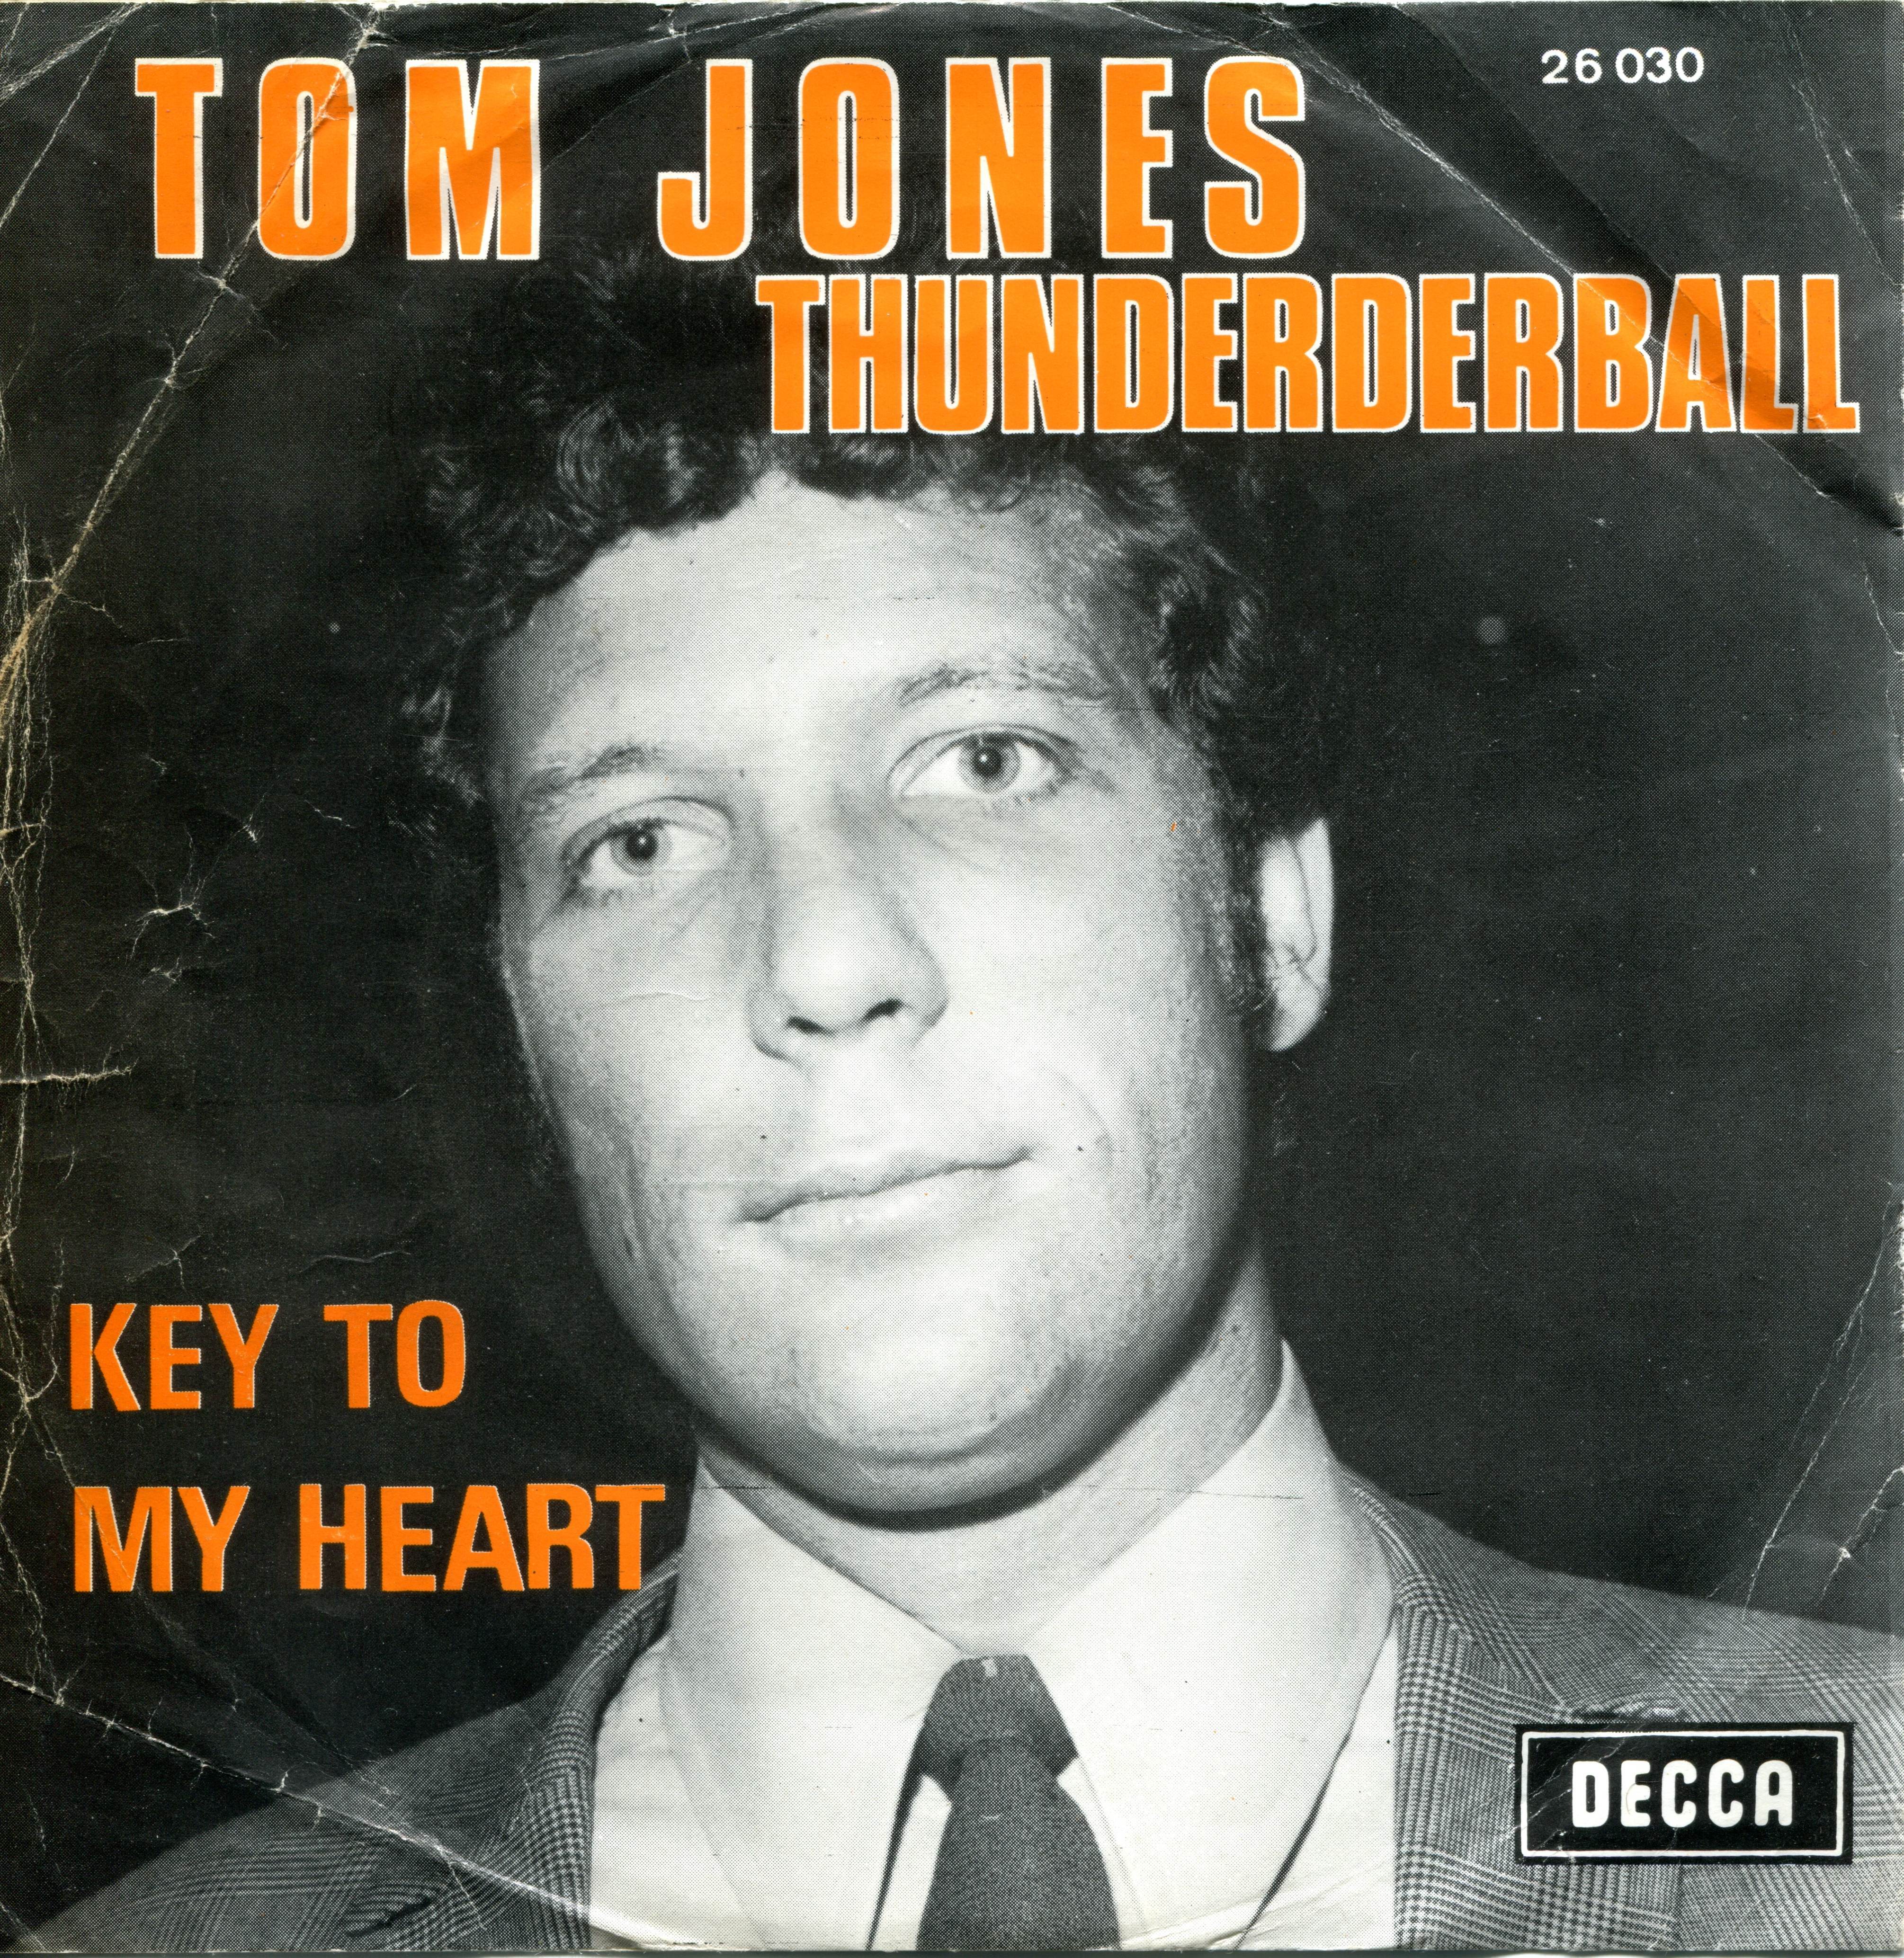 Tom Jones Thunderball record cover